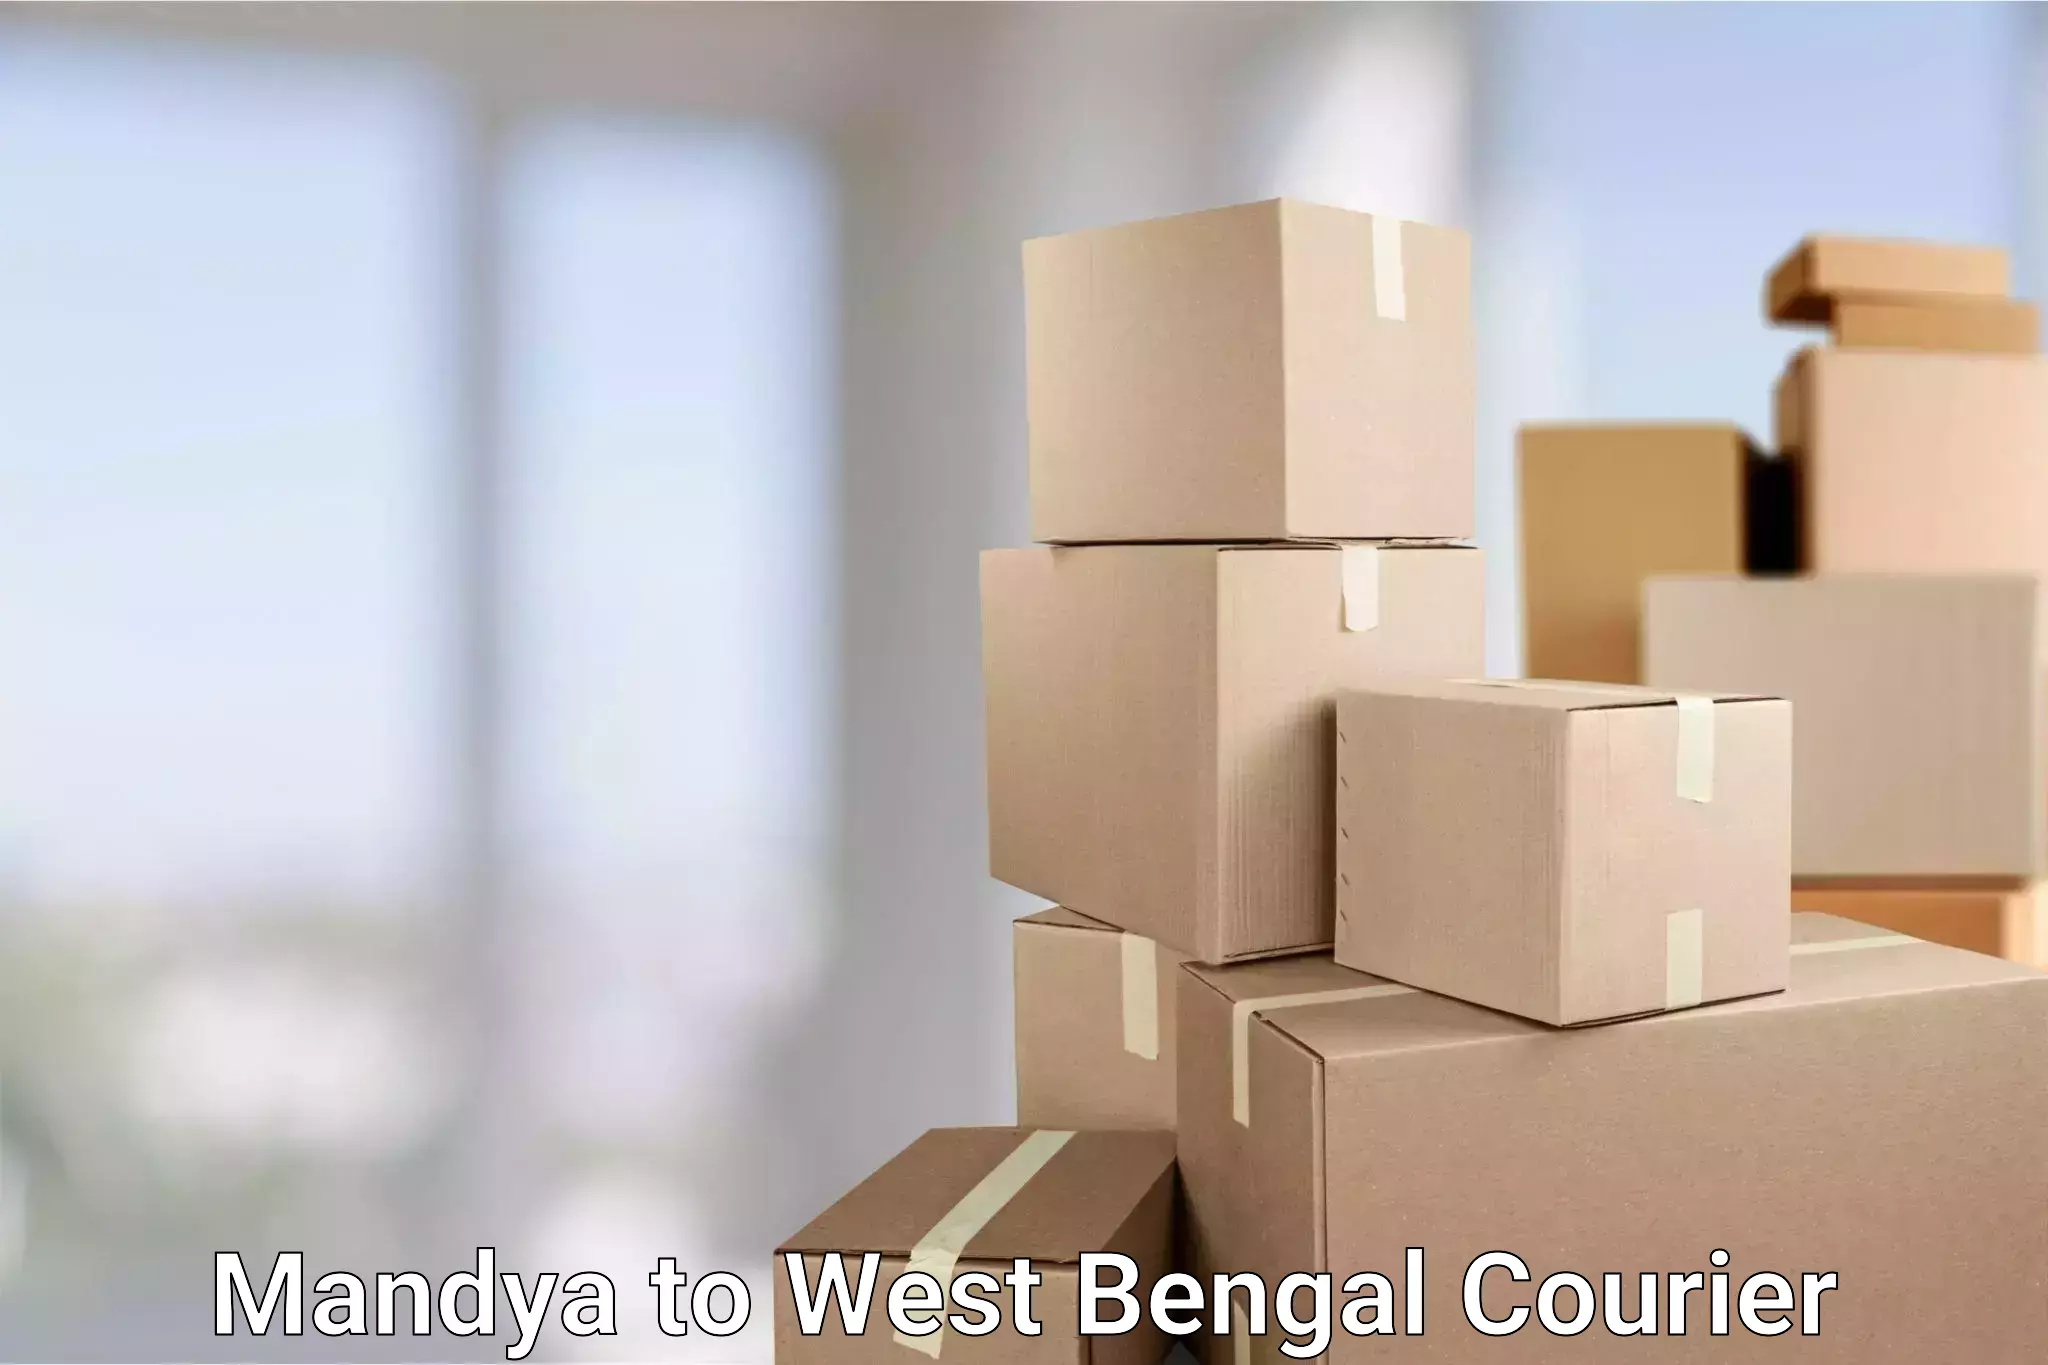 Courier service comparison Mandya to West Bengal